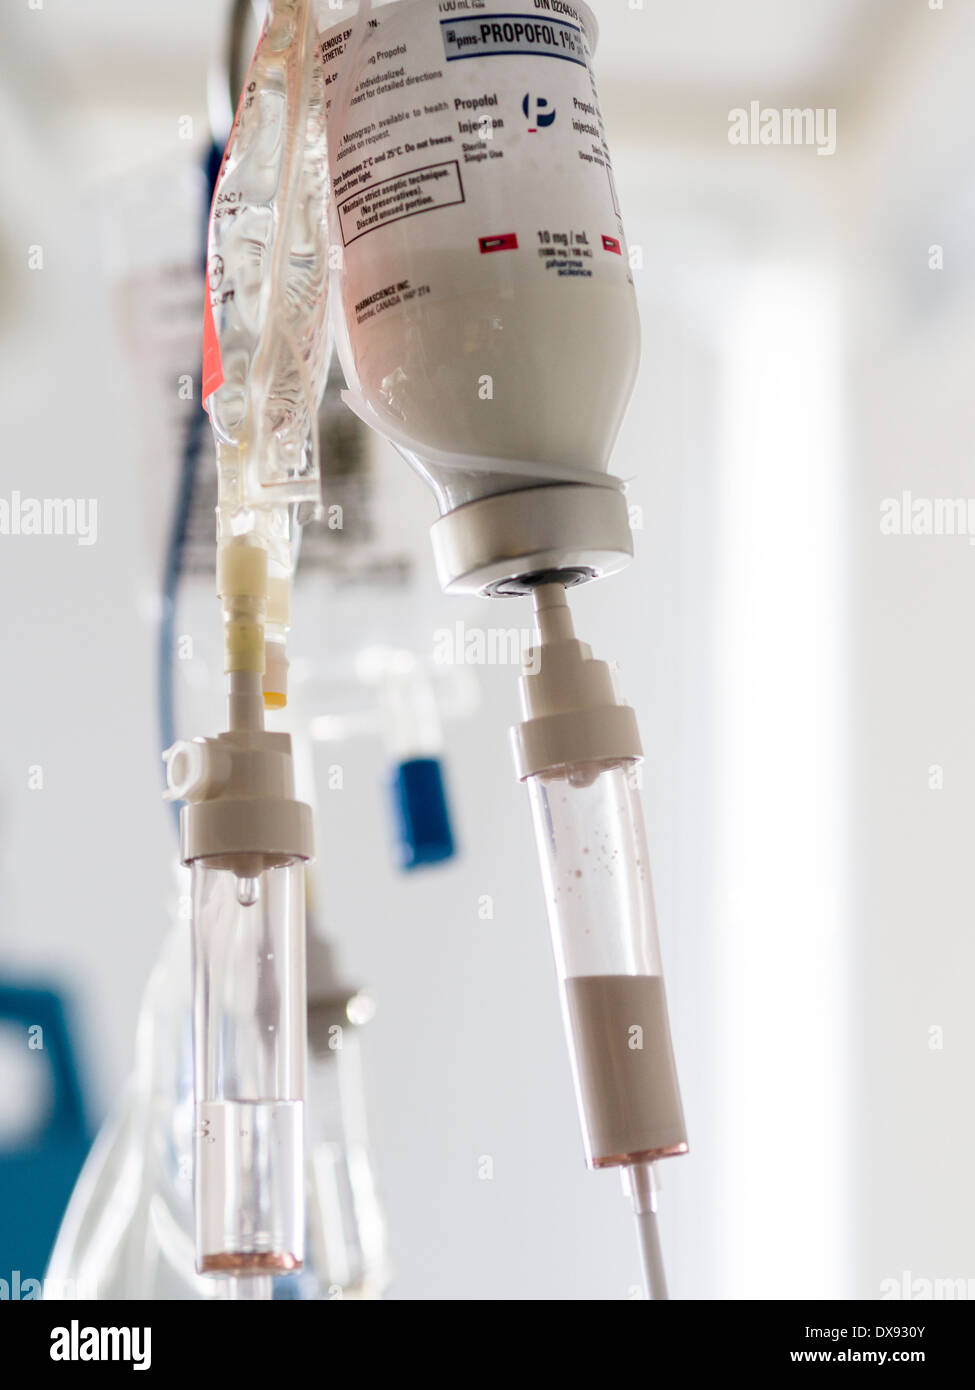 Bottle of Propofol Intravenous Drip. A bottle of propofol 1% and another intravenous bag drips in a hospital ICU room. Stock Photo